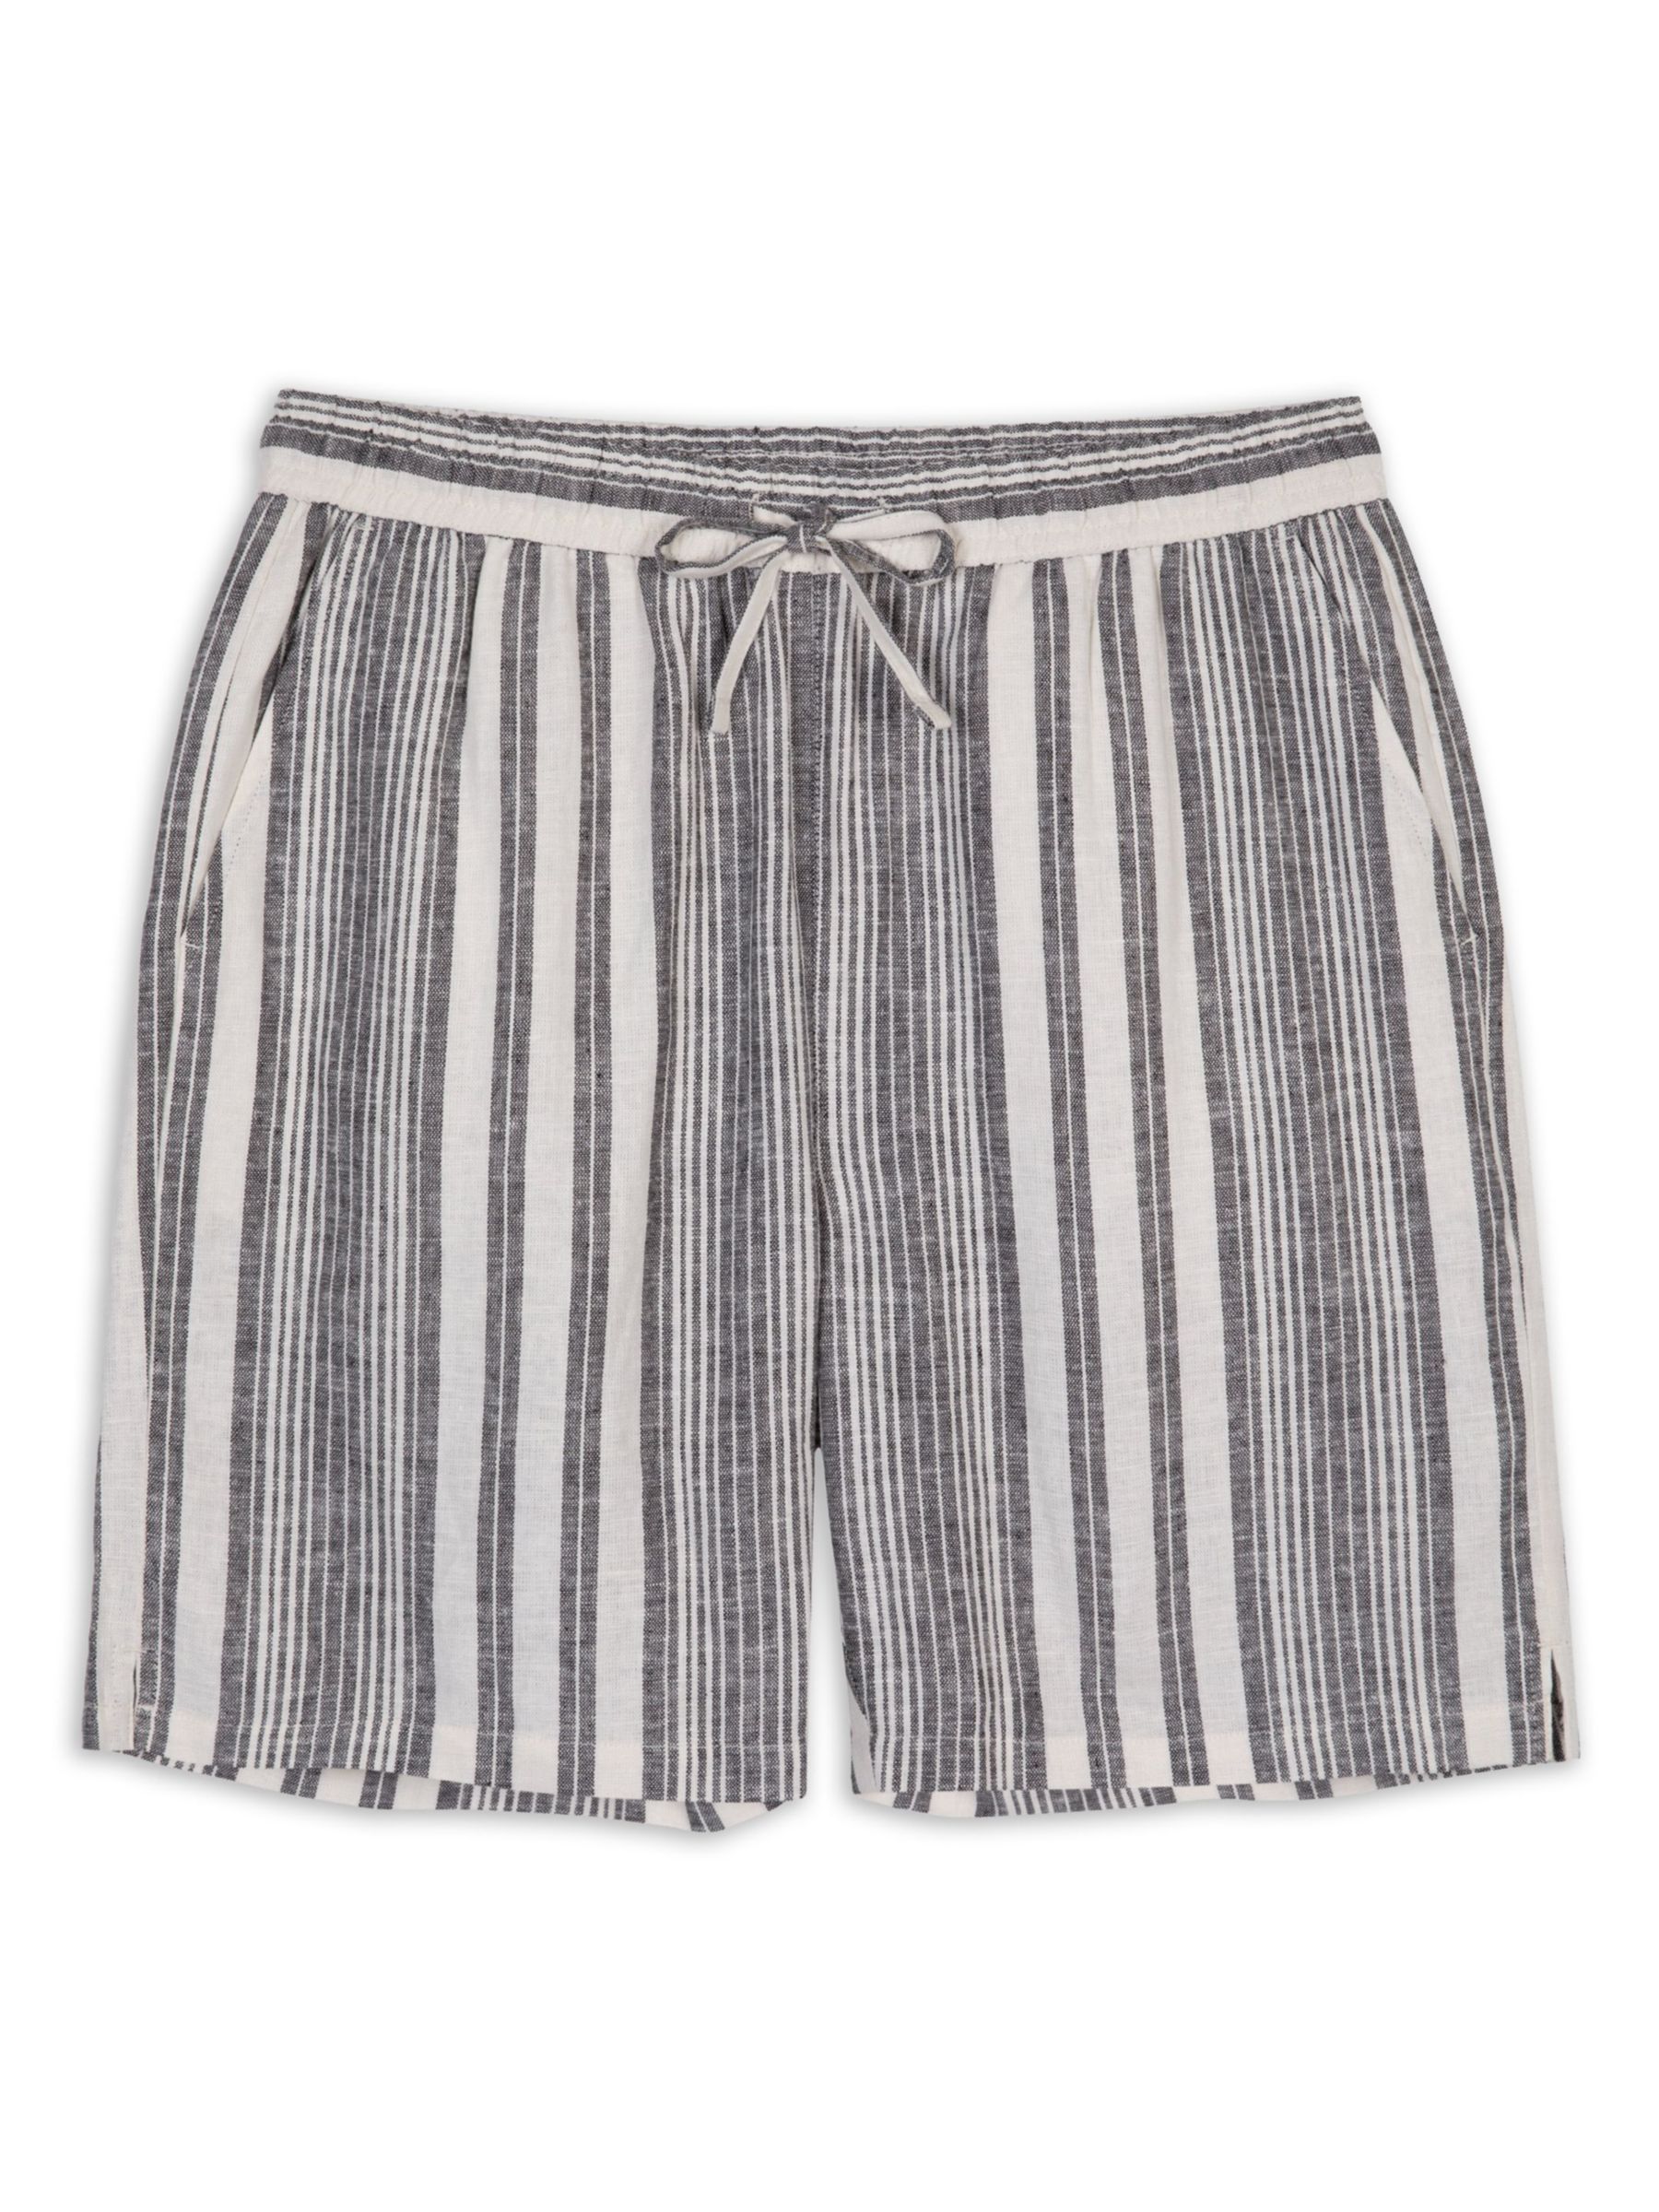 Chelsea Peers Linen Blend Stripe Shorts, White/Multi, L